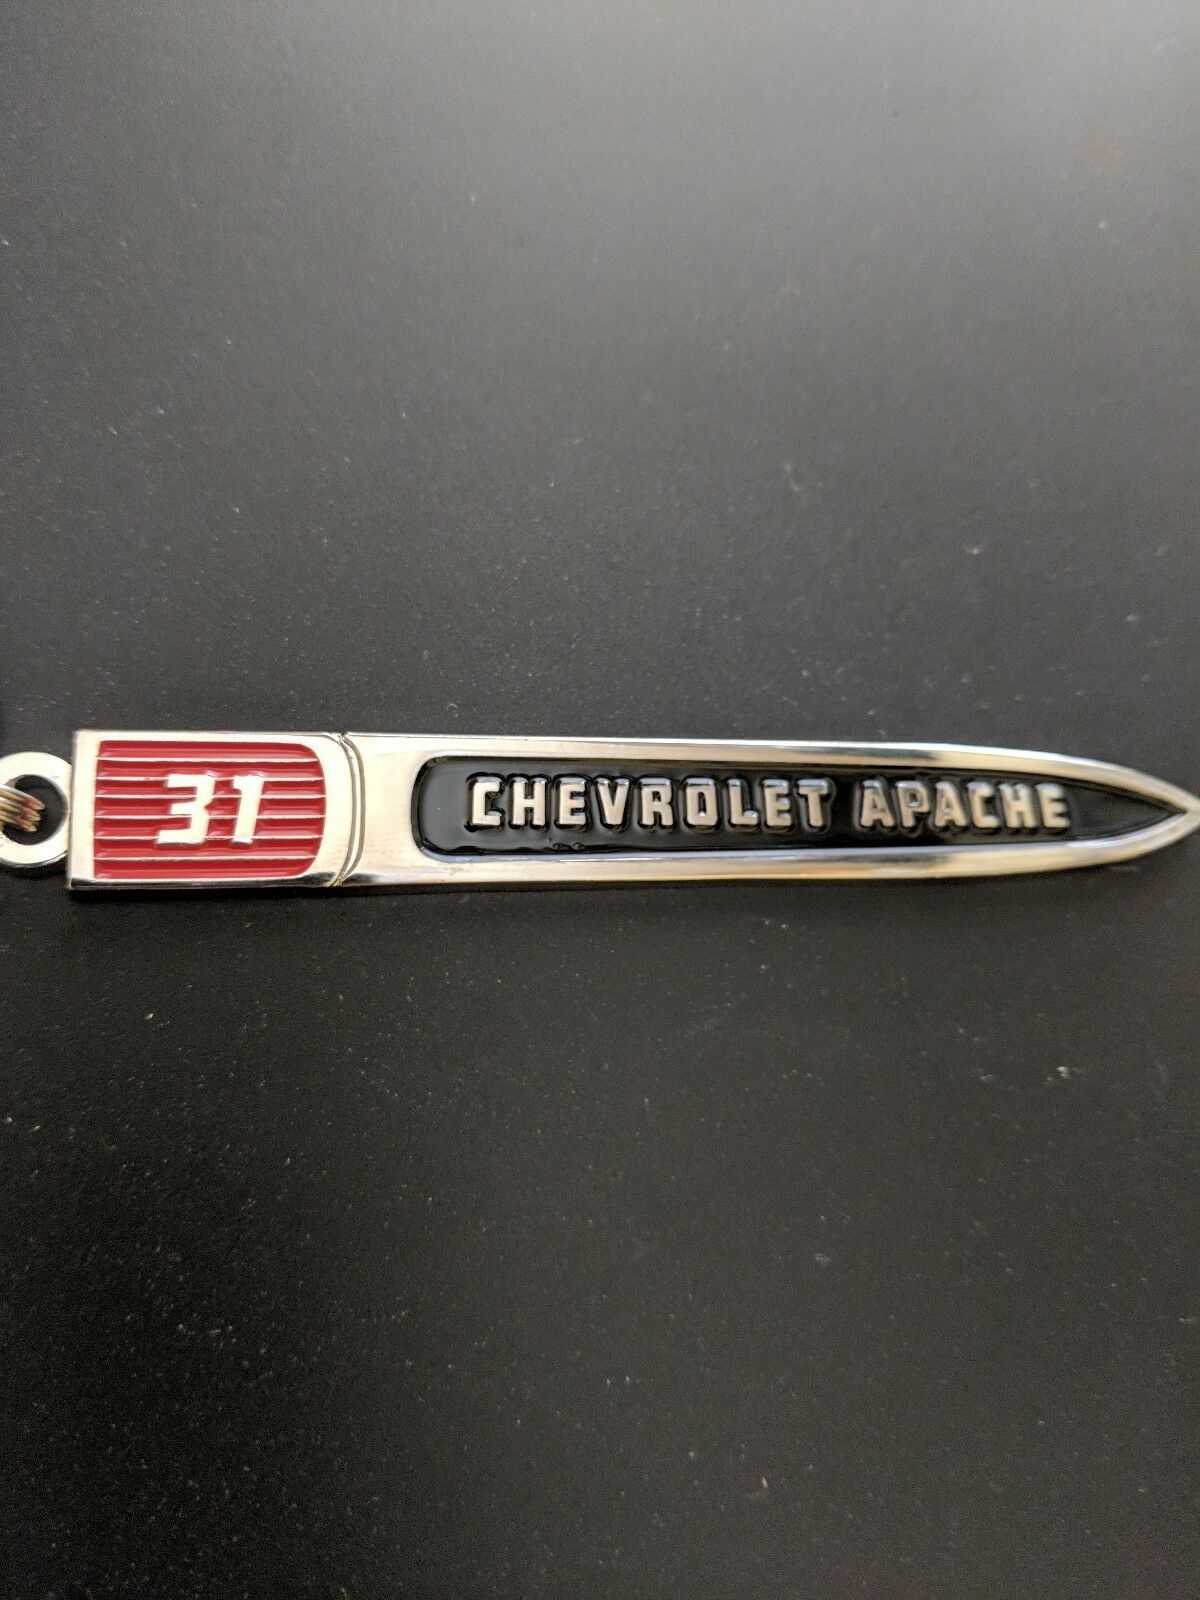 F1 Chevy Apache 31 Series Fender Emblem Keychain 